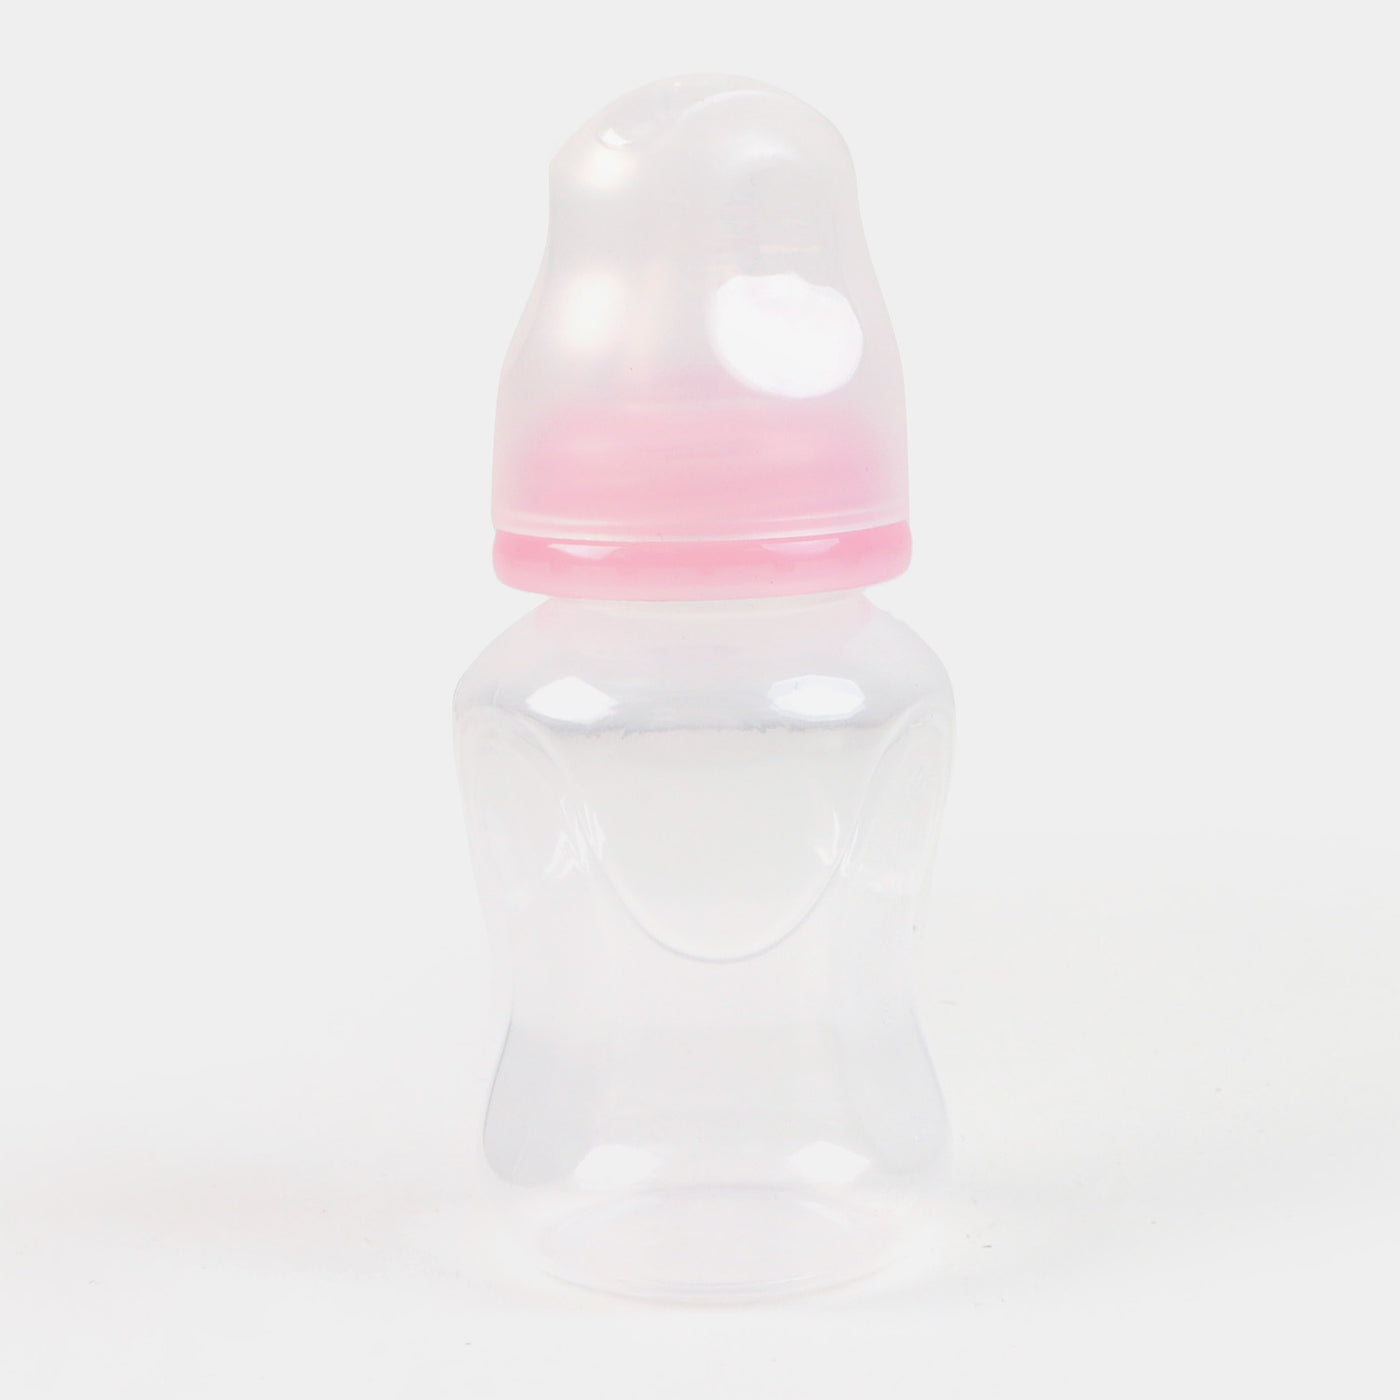 Cuddles Feeding Bottle 125ML - Pink